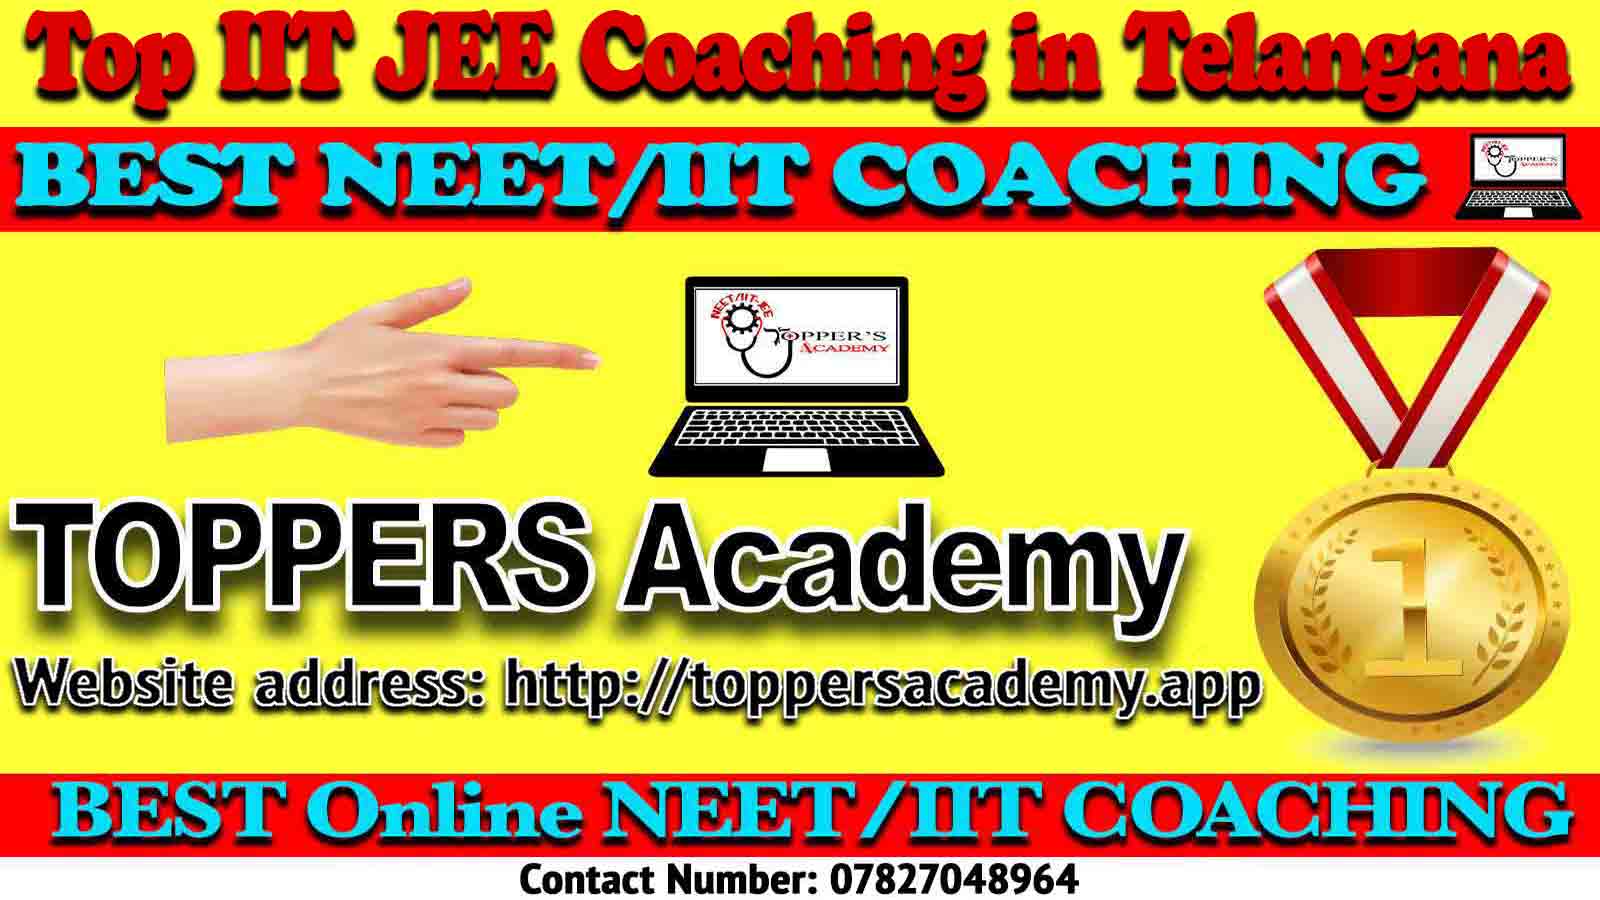 Top IIT JEE Coaching in Telangana